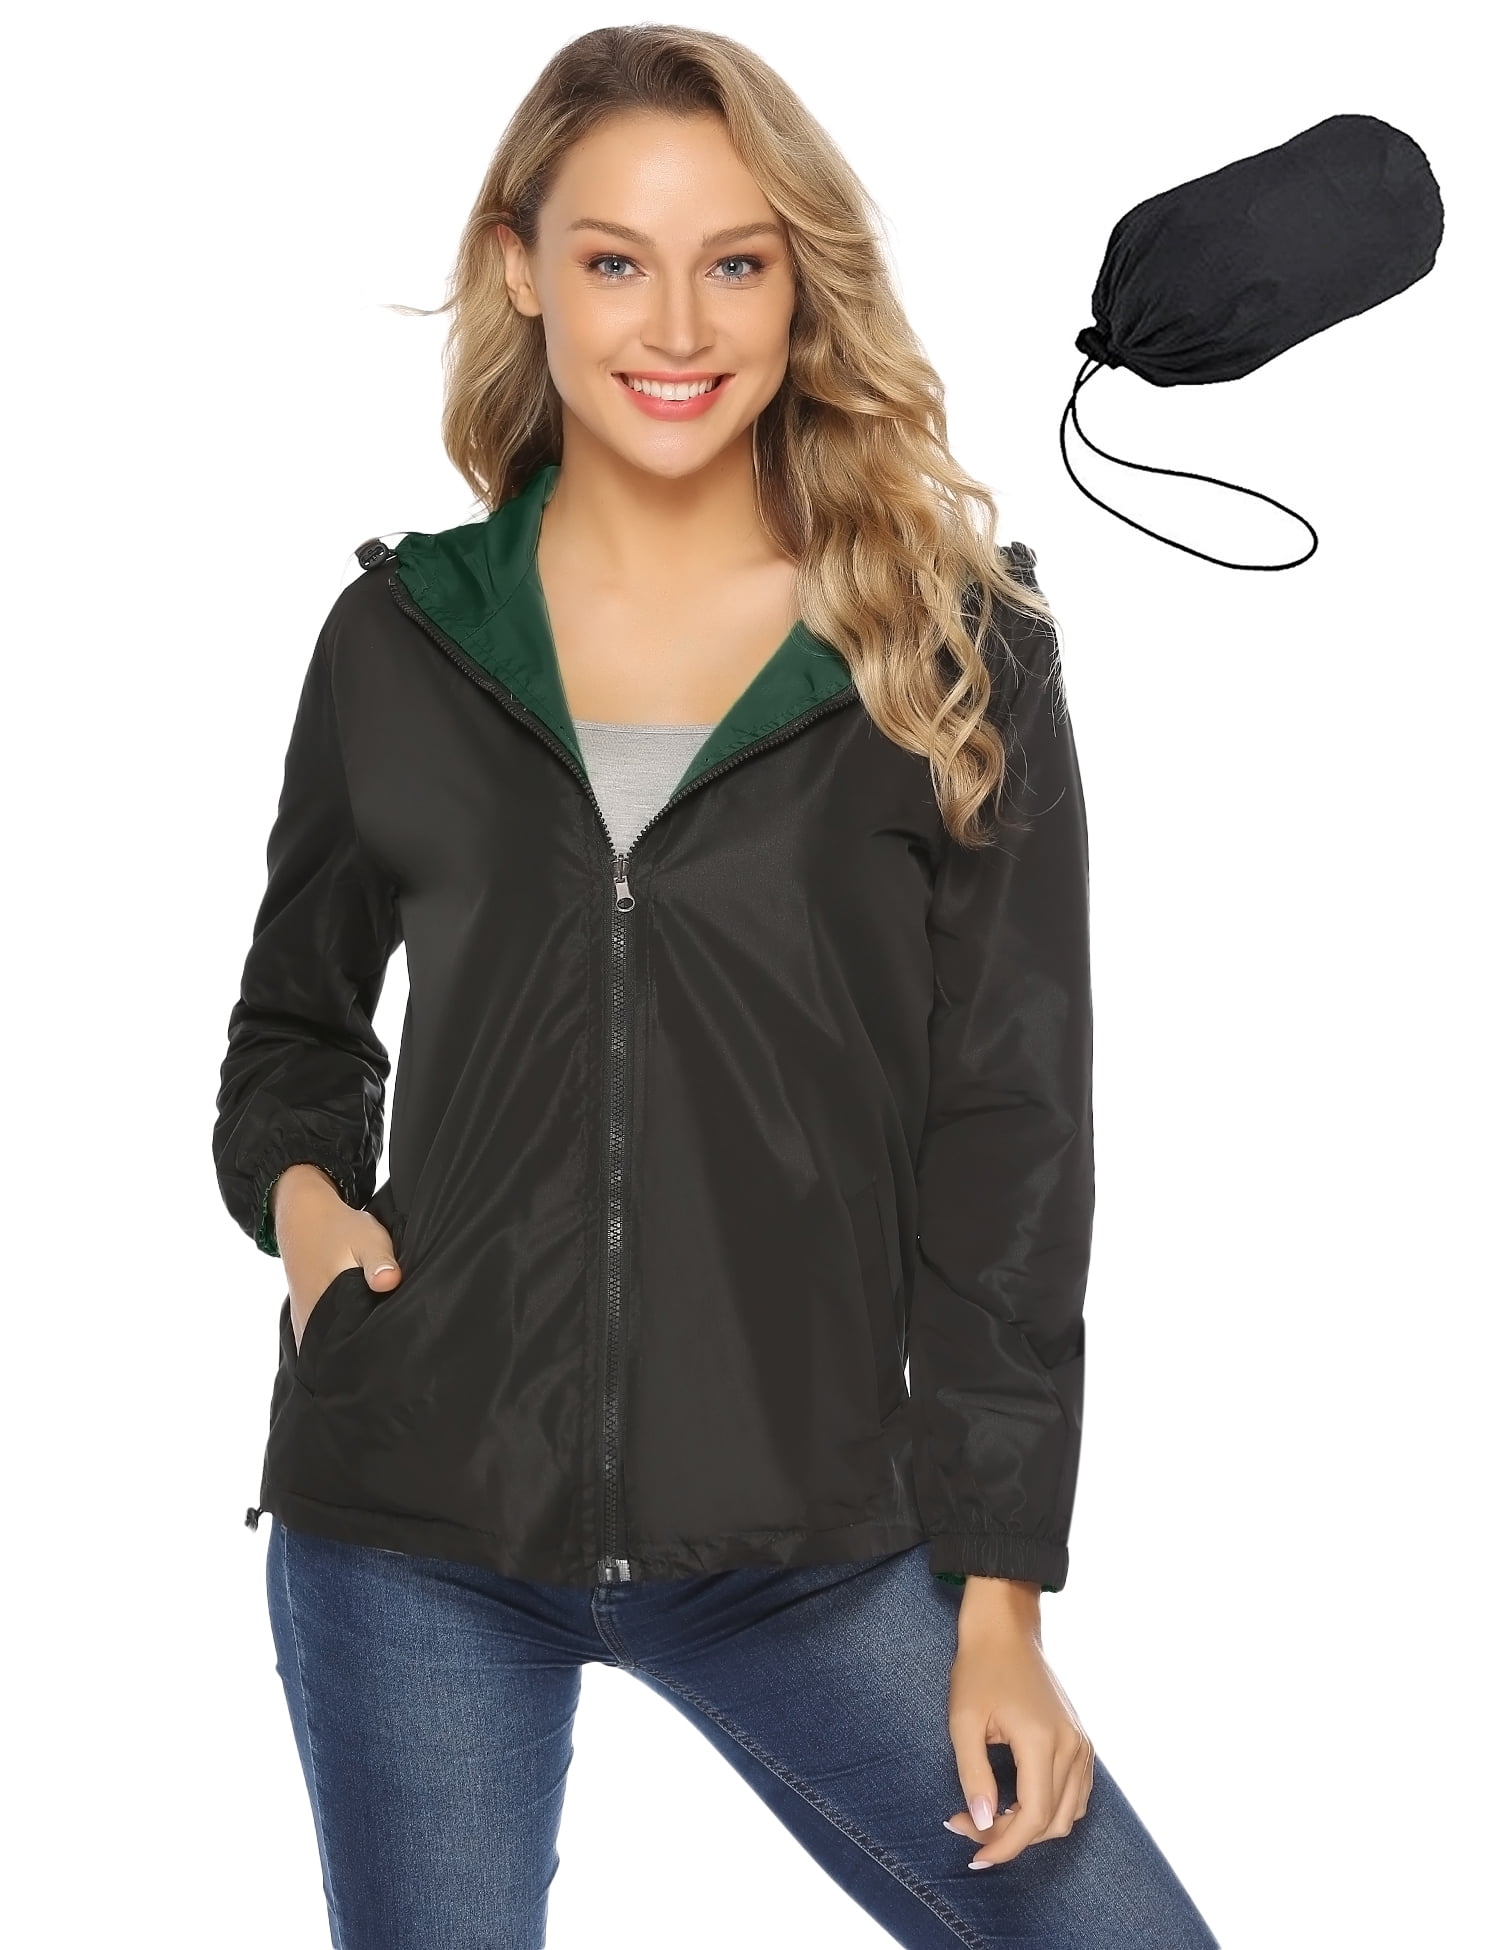 Abollria Raincoats Waterproof Lightweight Rain Jacket Womens Trench Coats